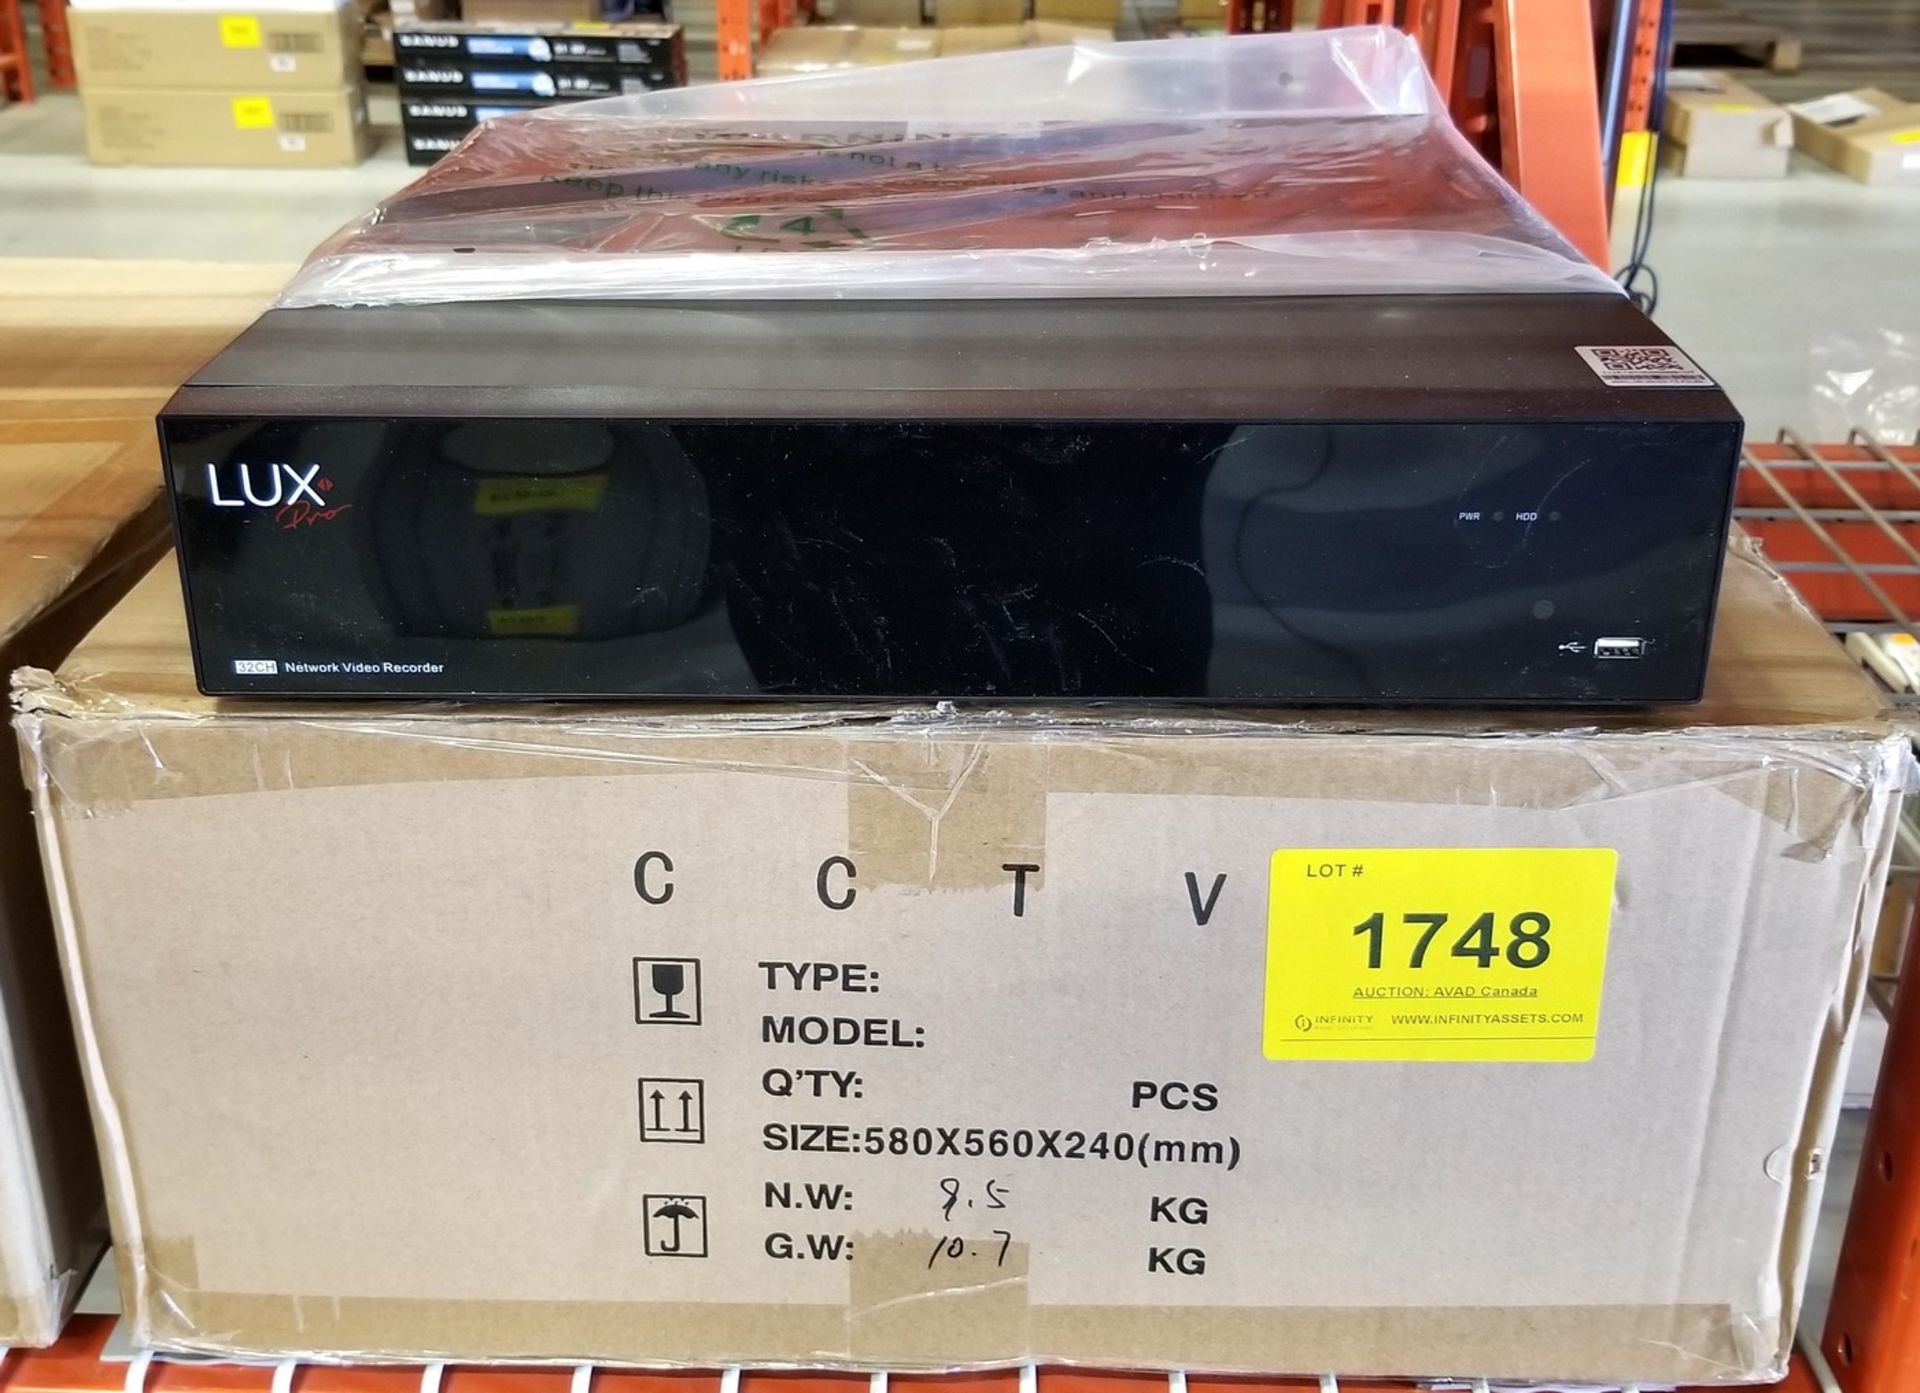 LUX, LP-PRONVR32-0 NETWORK VIDEO RECORDER - (NOB) COST $528